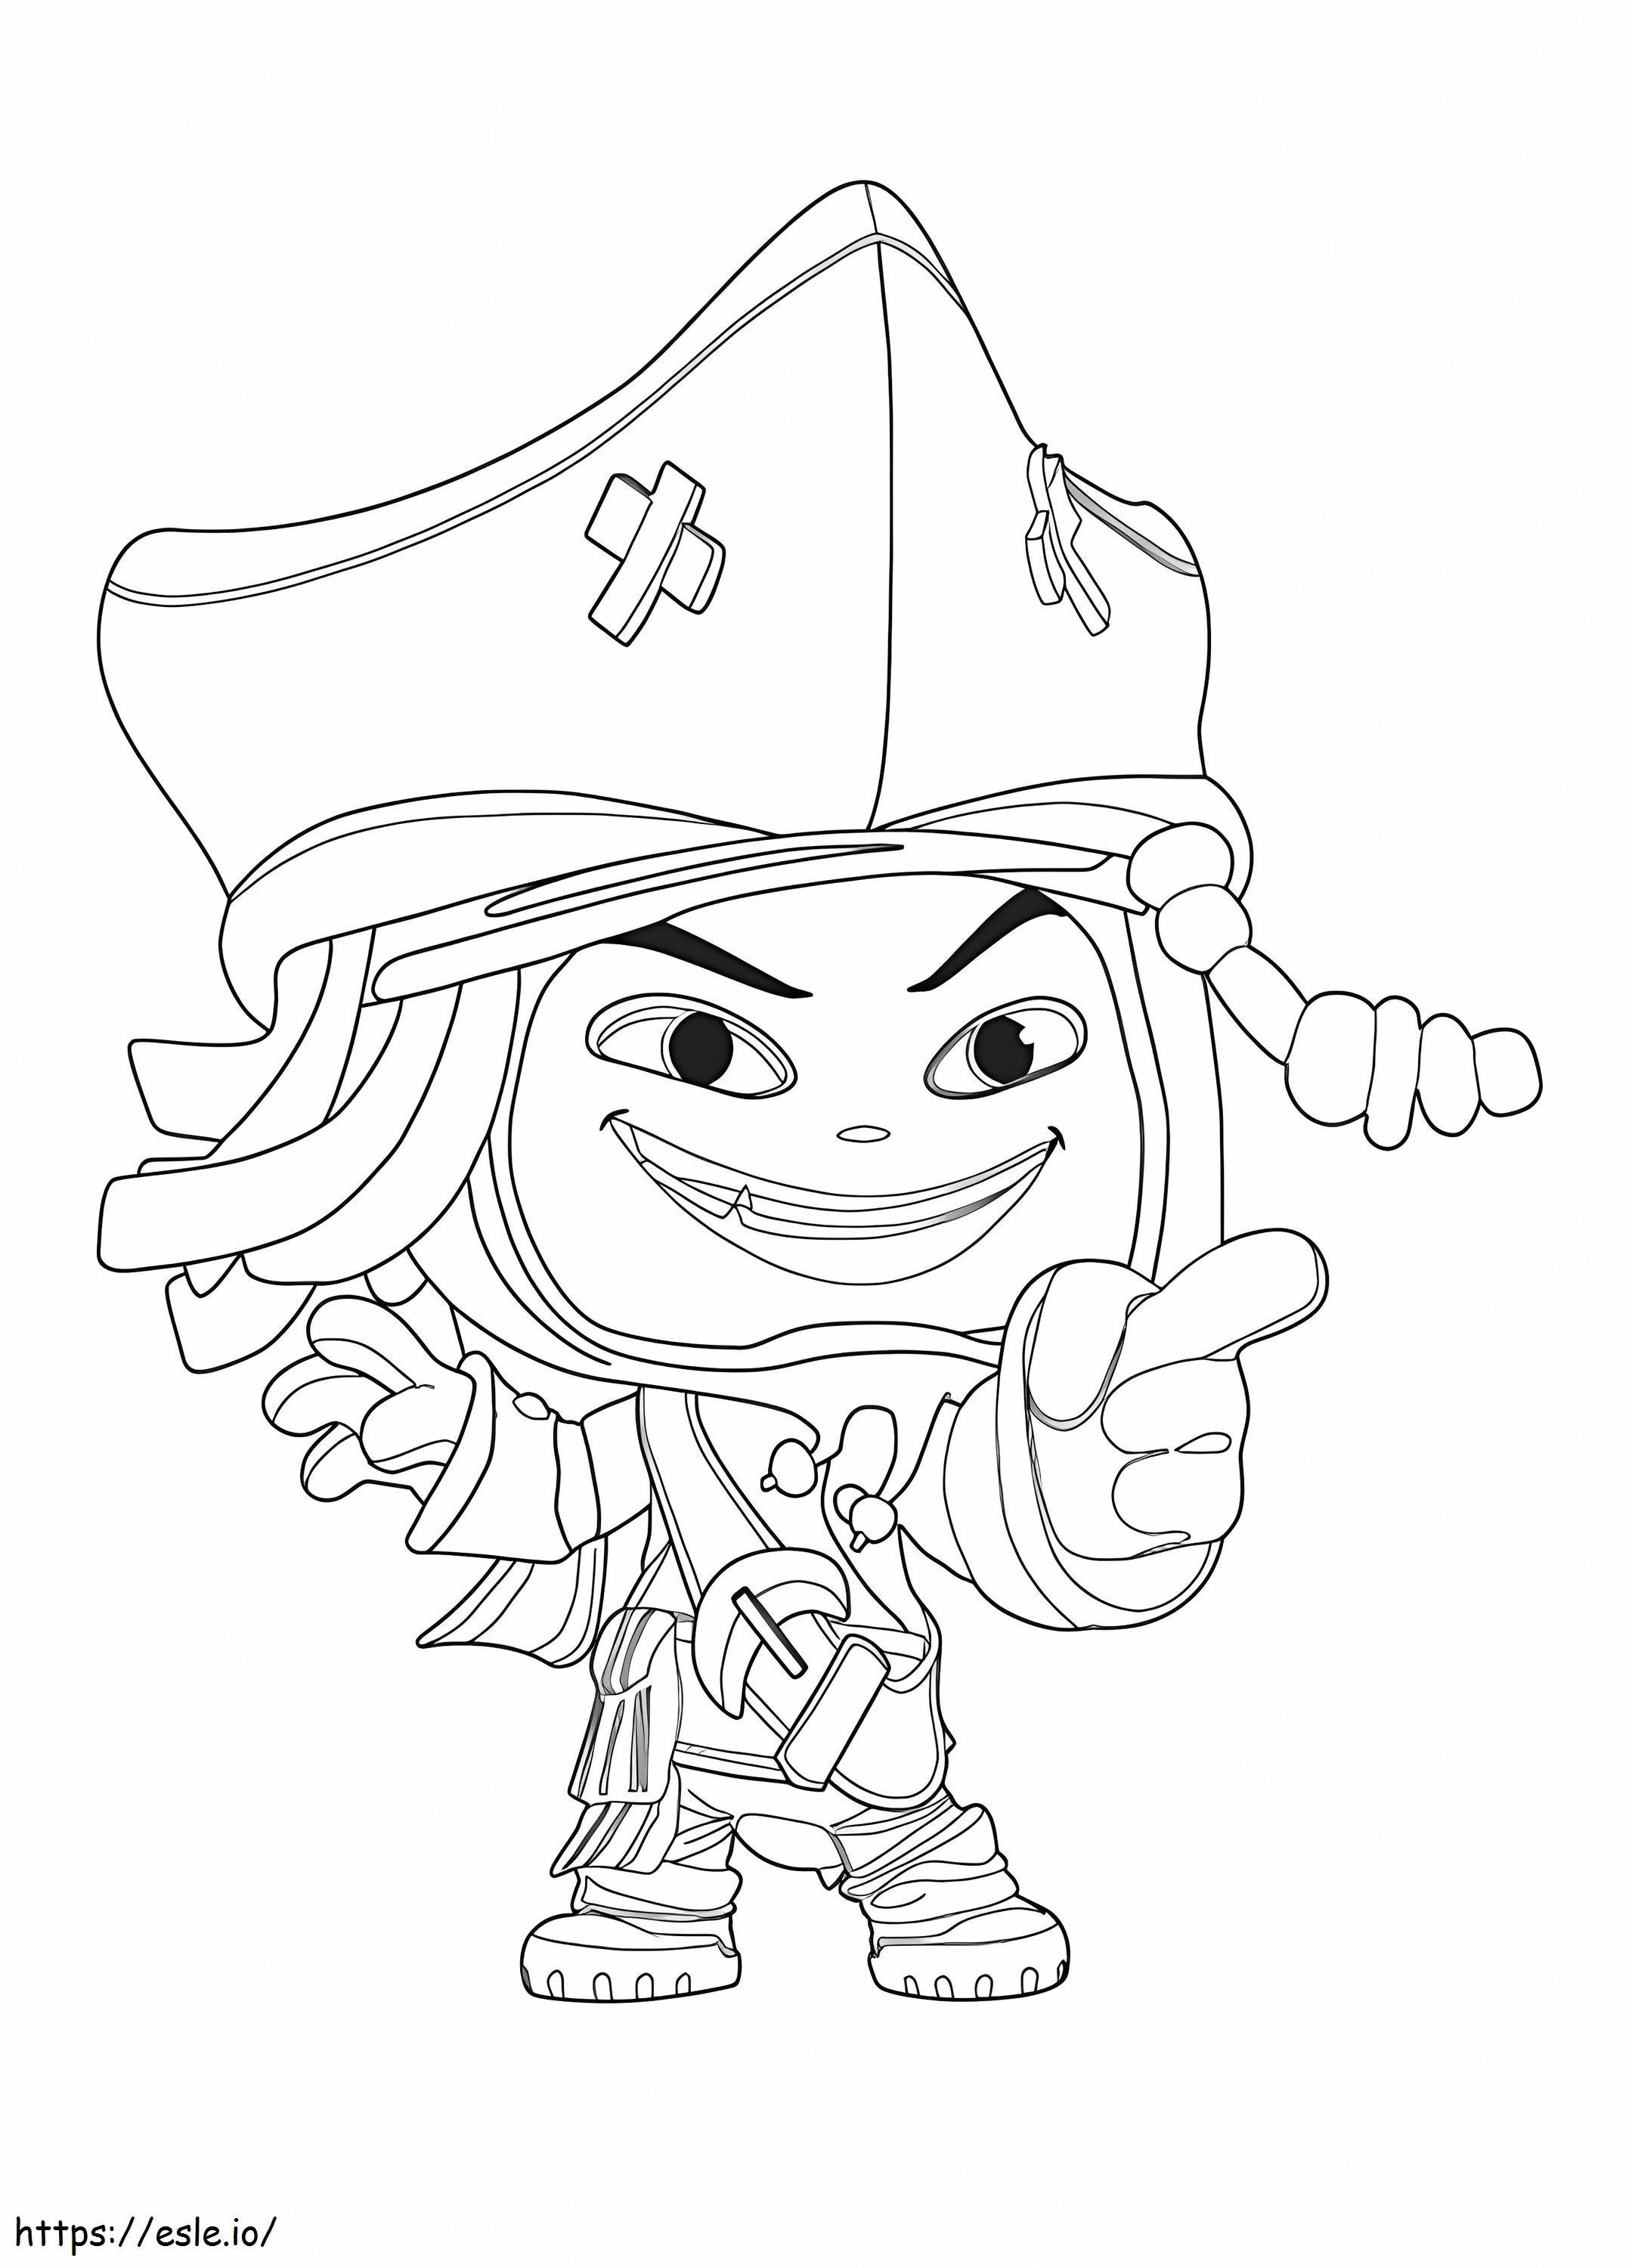 Jack Sparrow z uniwersum Disneya kolorowanka